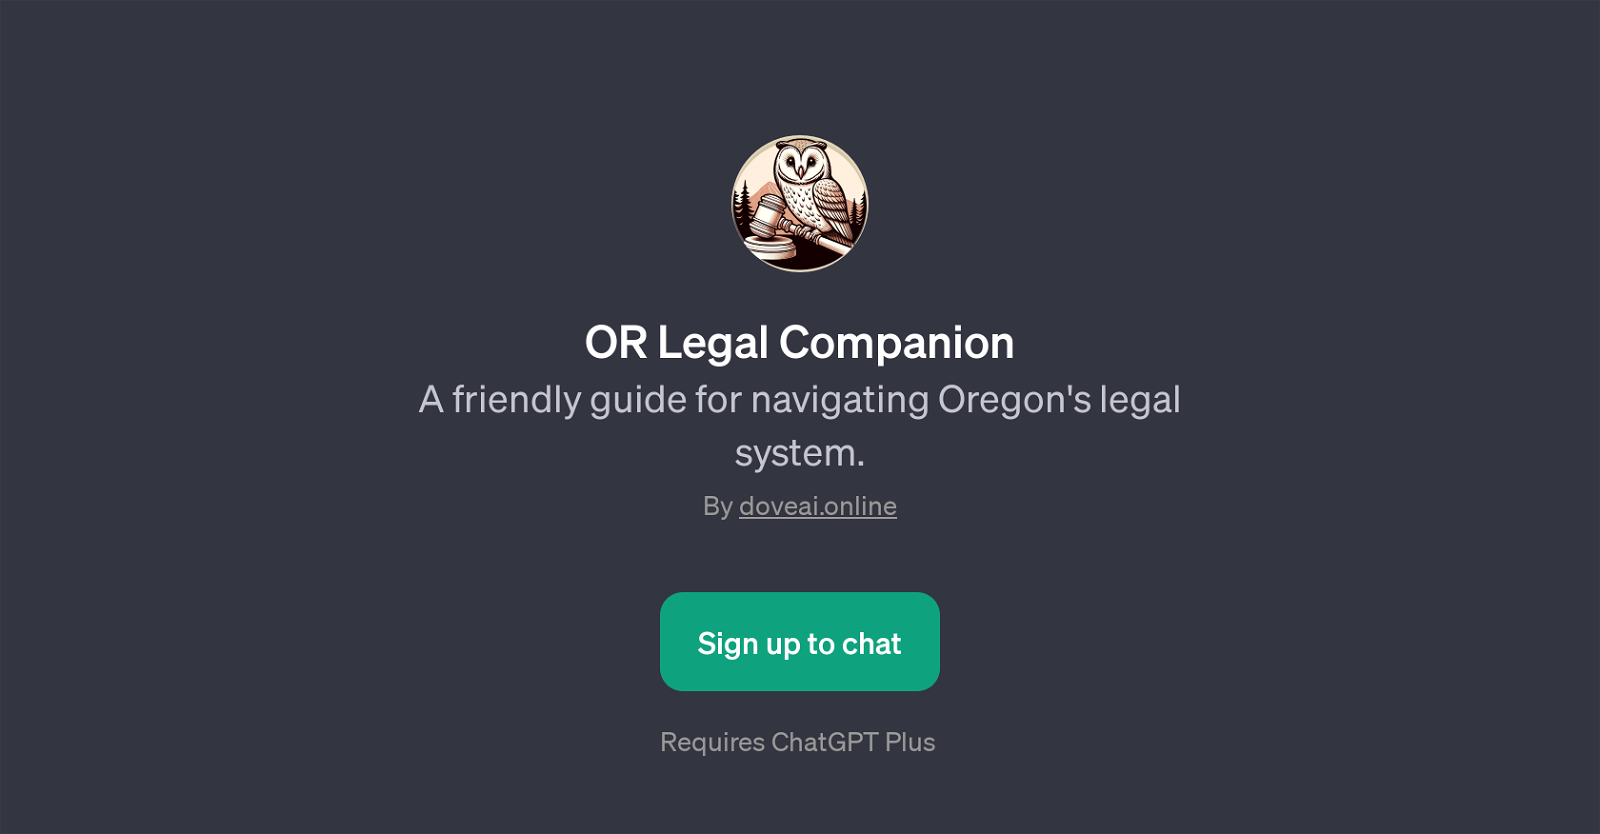 OR Legal Companion website